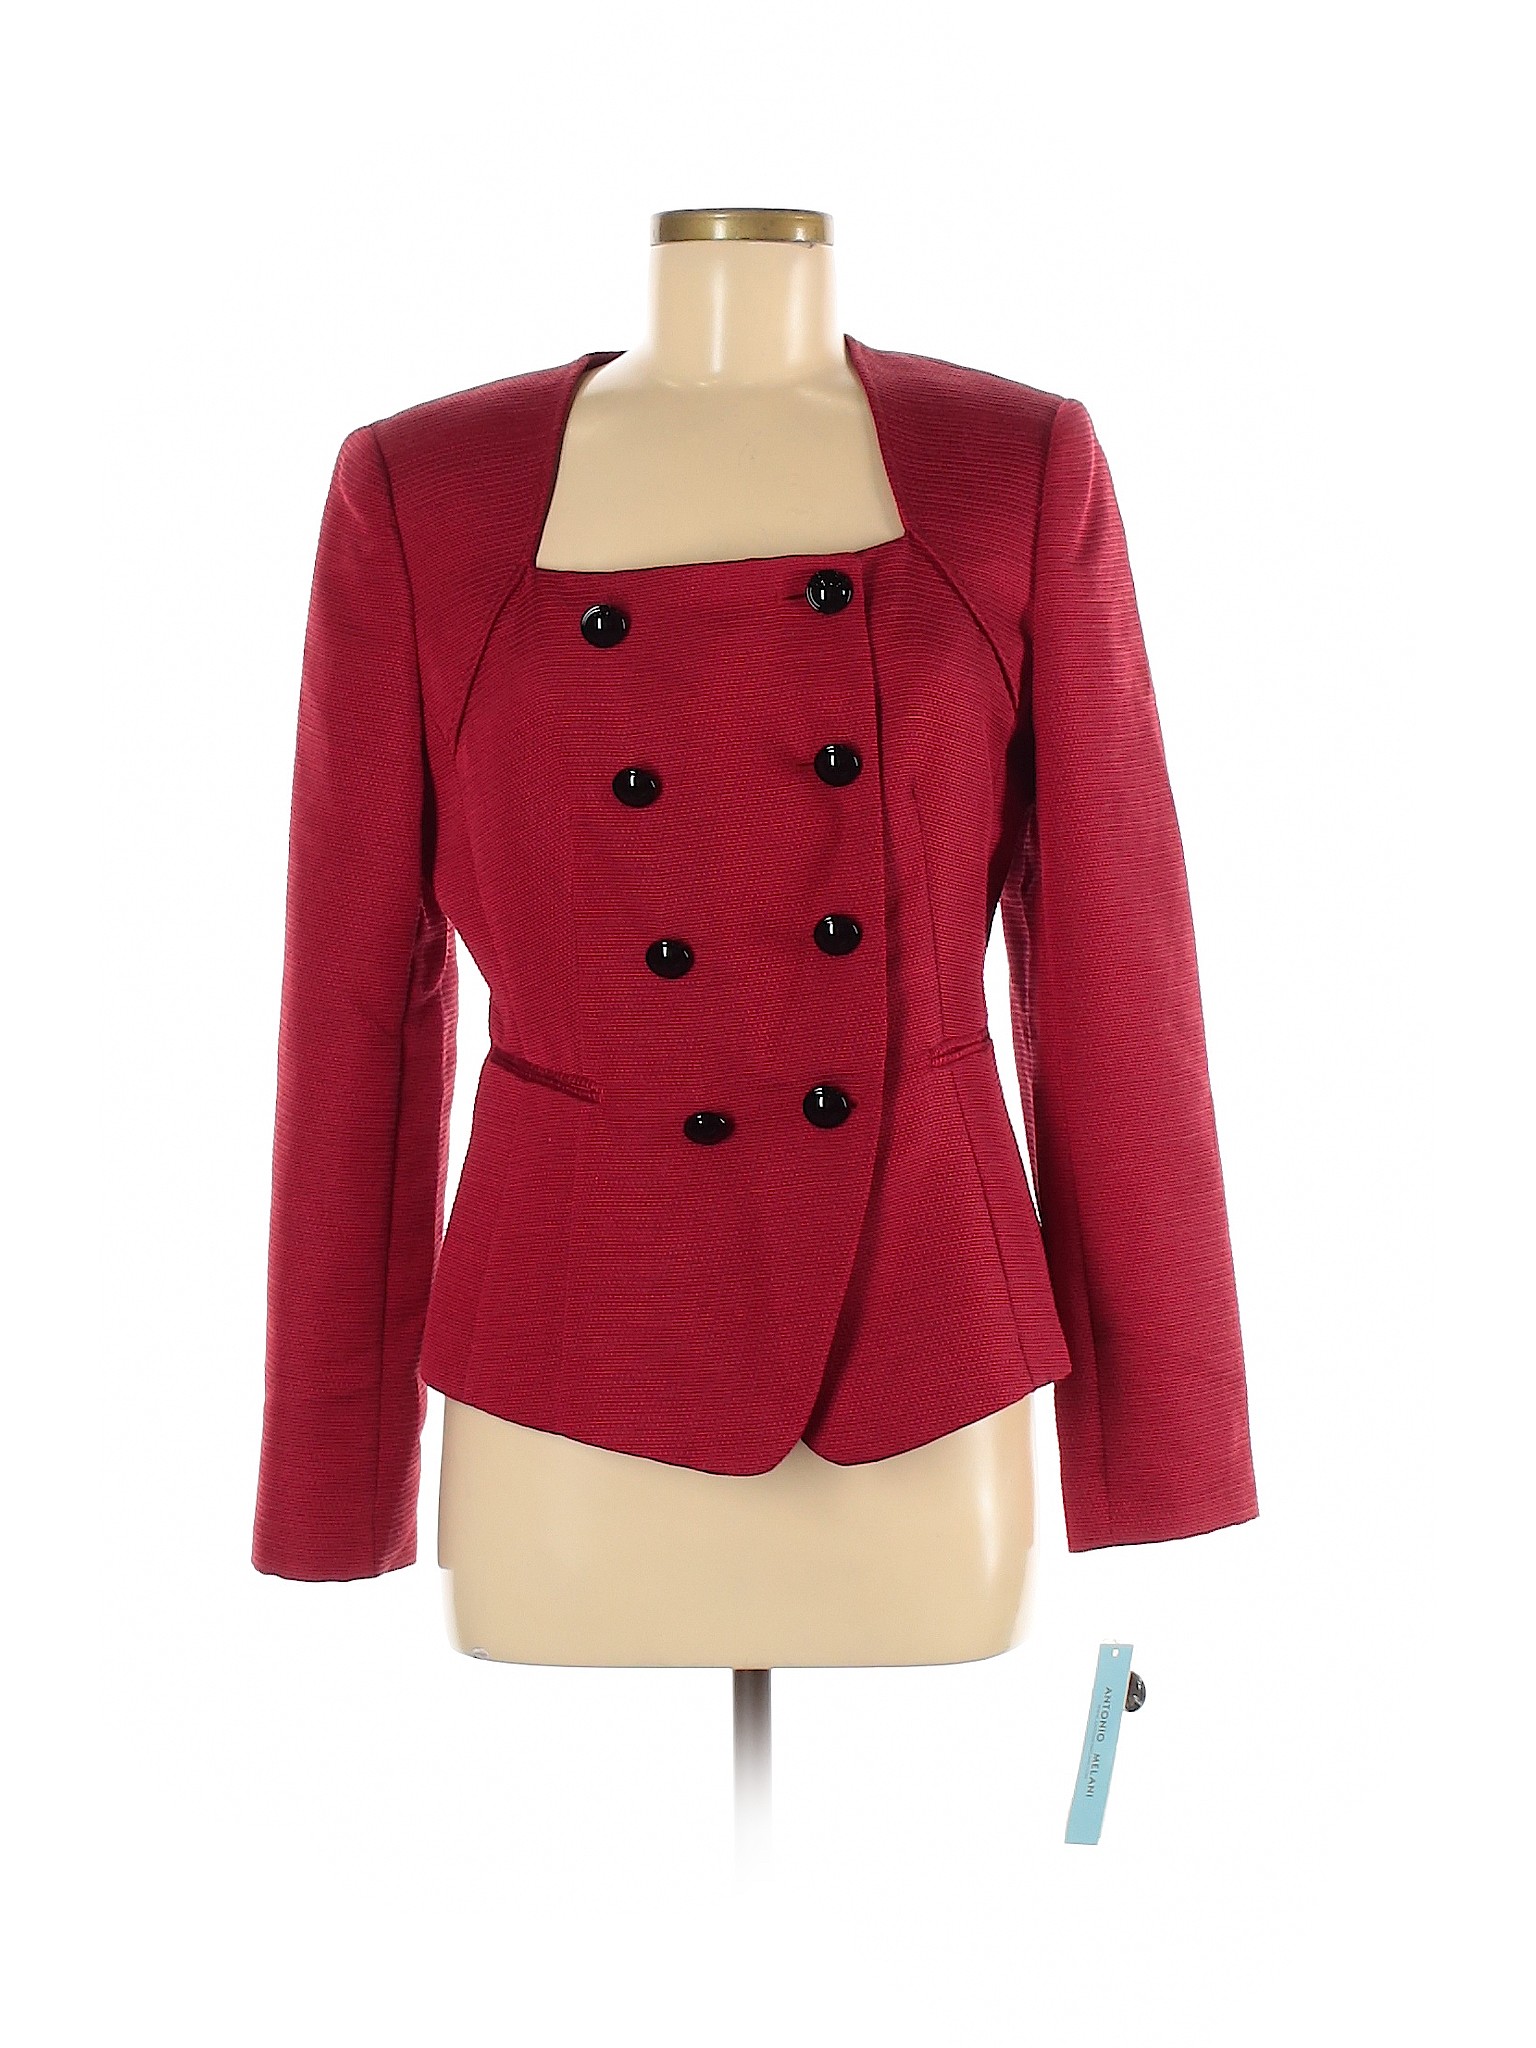 NWT Antonio Melani Women Red Jacket 8 | eBay